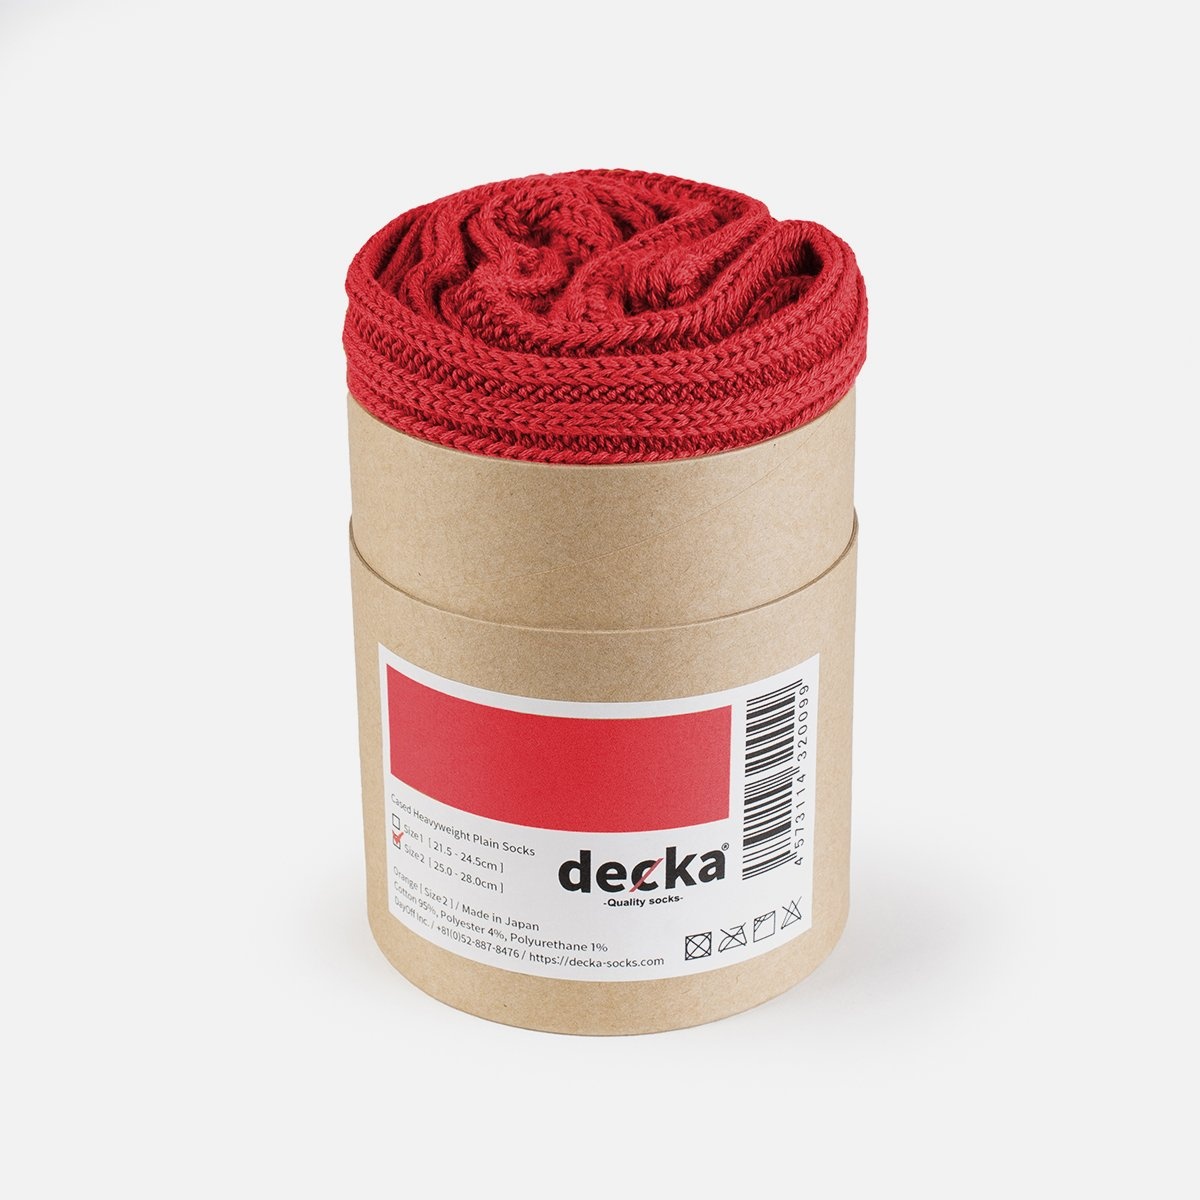 DEC-CAS-RED Decka Cased Heavyweight Plain Socks - Red - 1